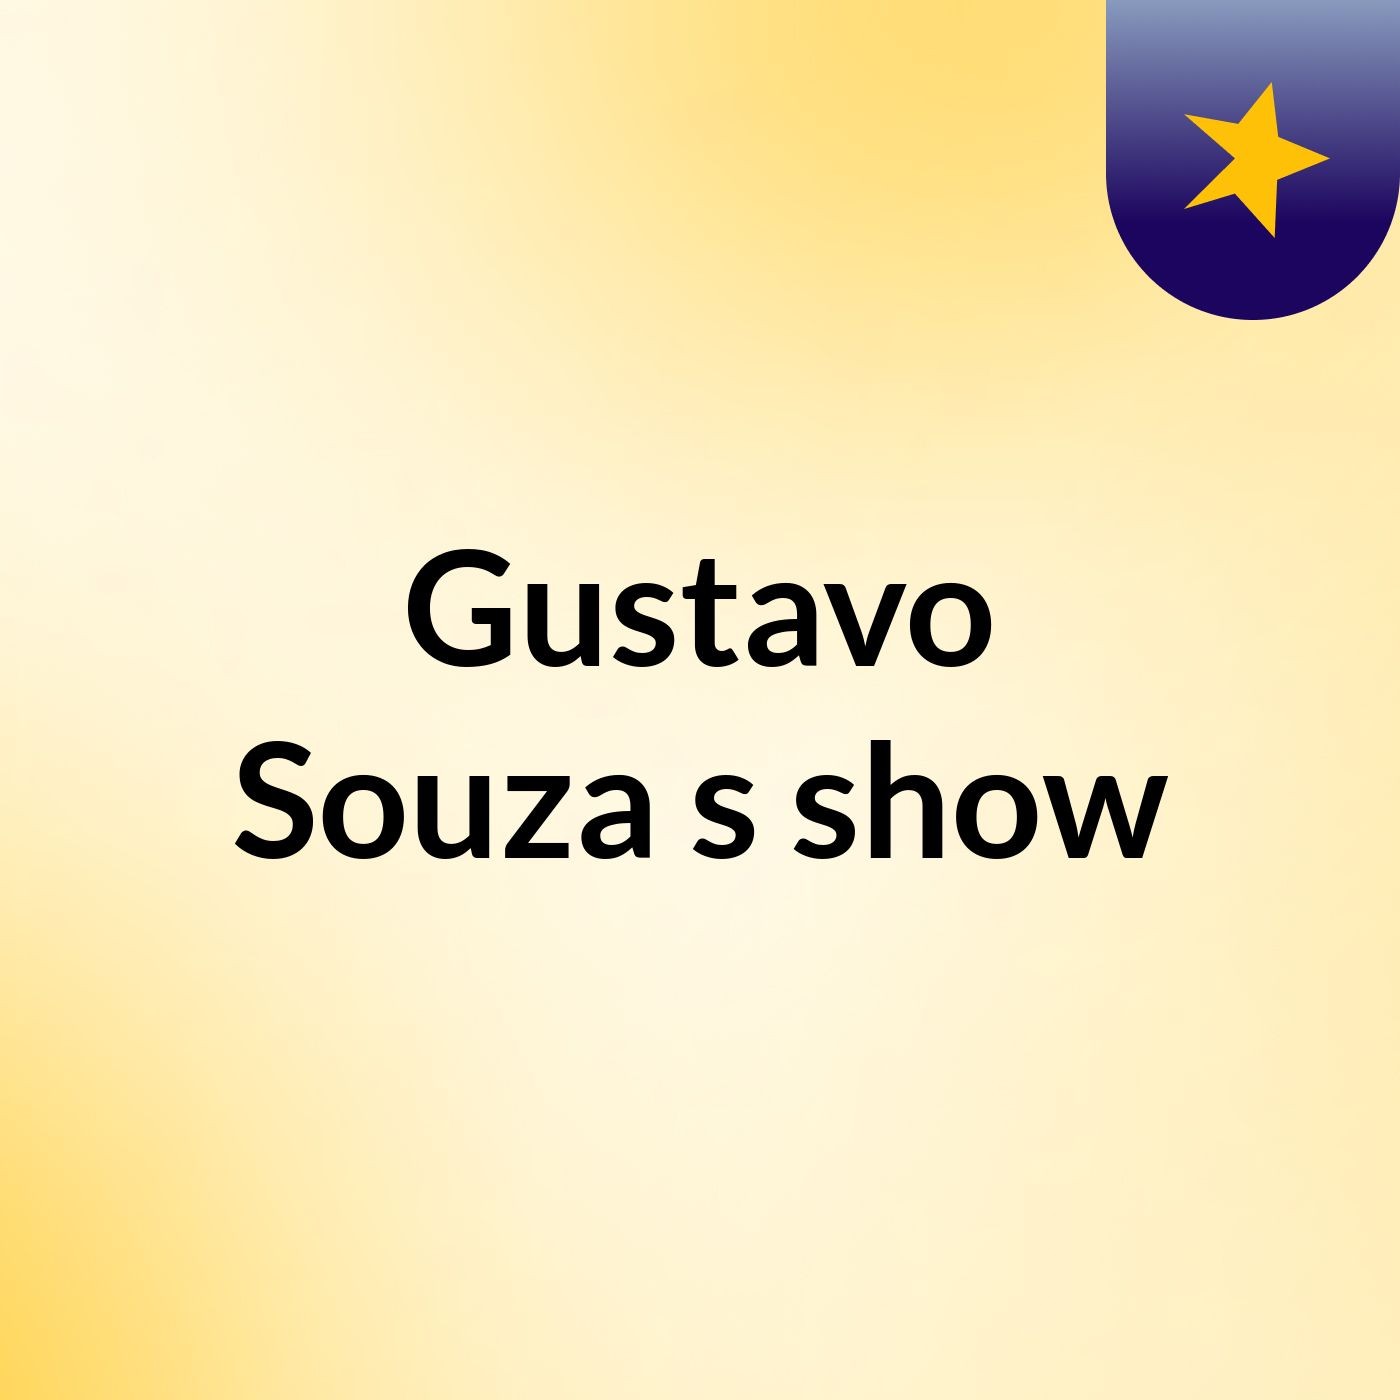 Gustavo Souza's show